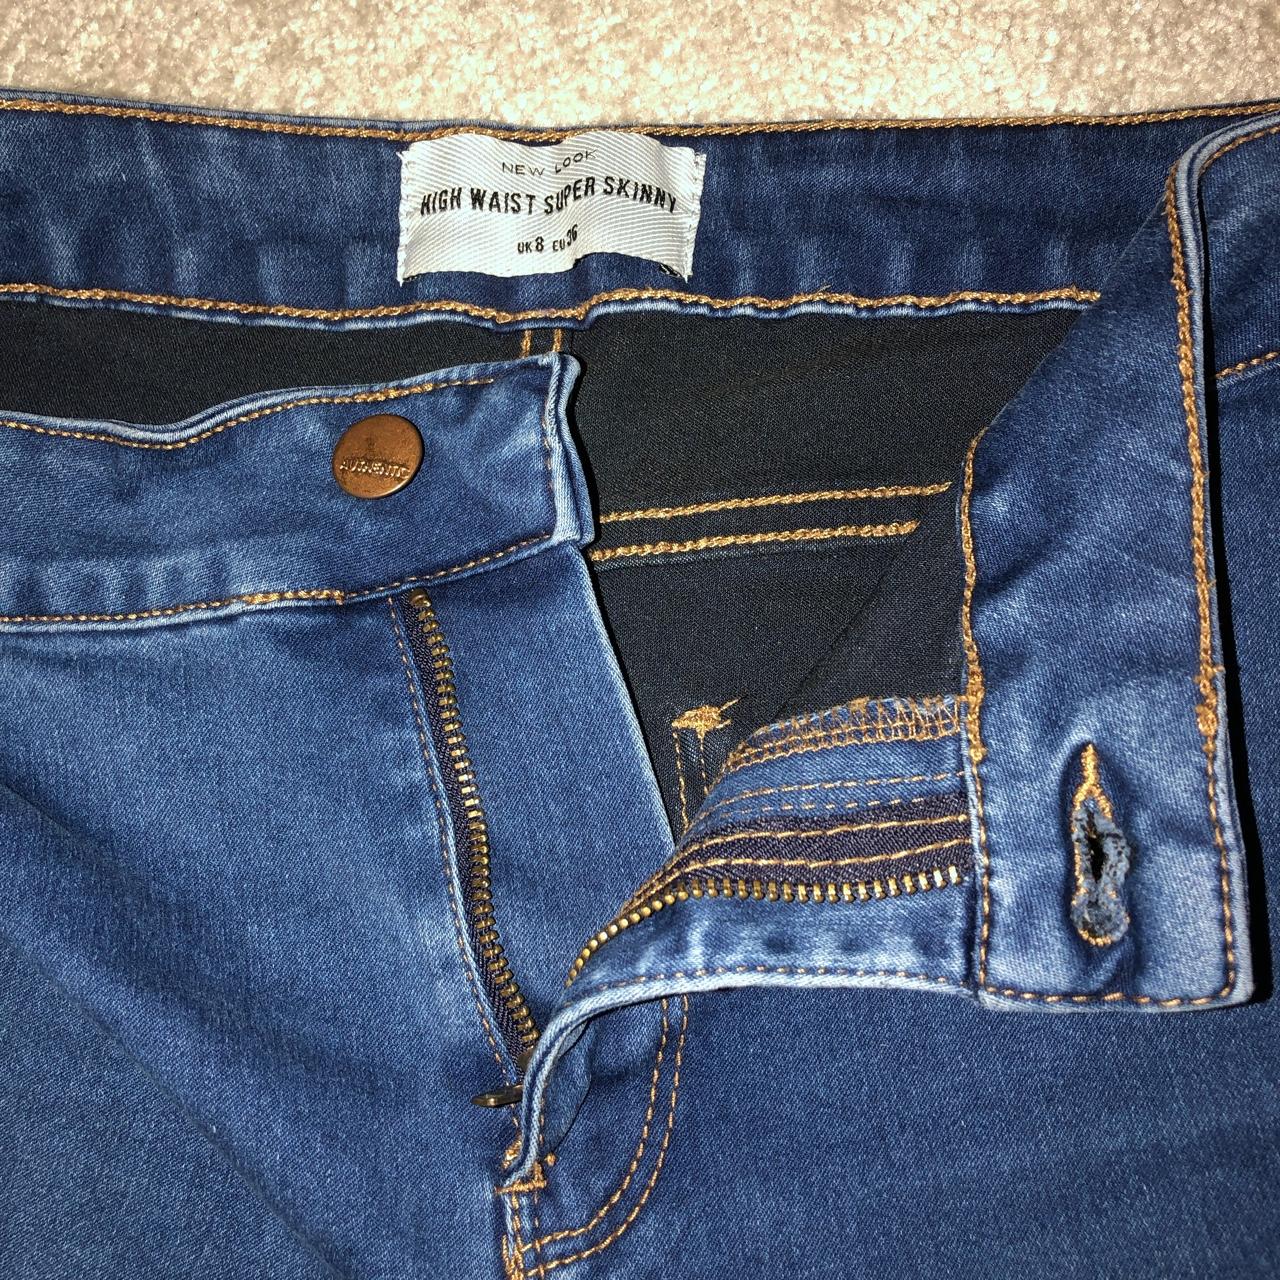 New Look Women's Jeans | Depop